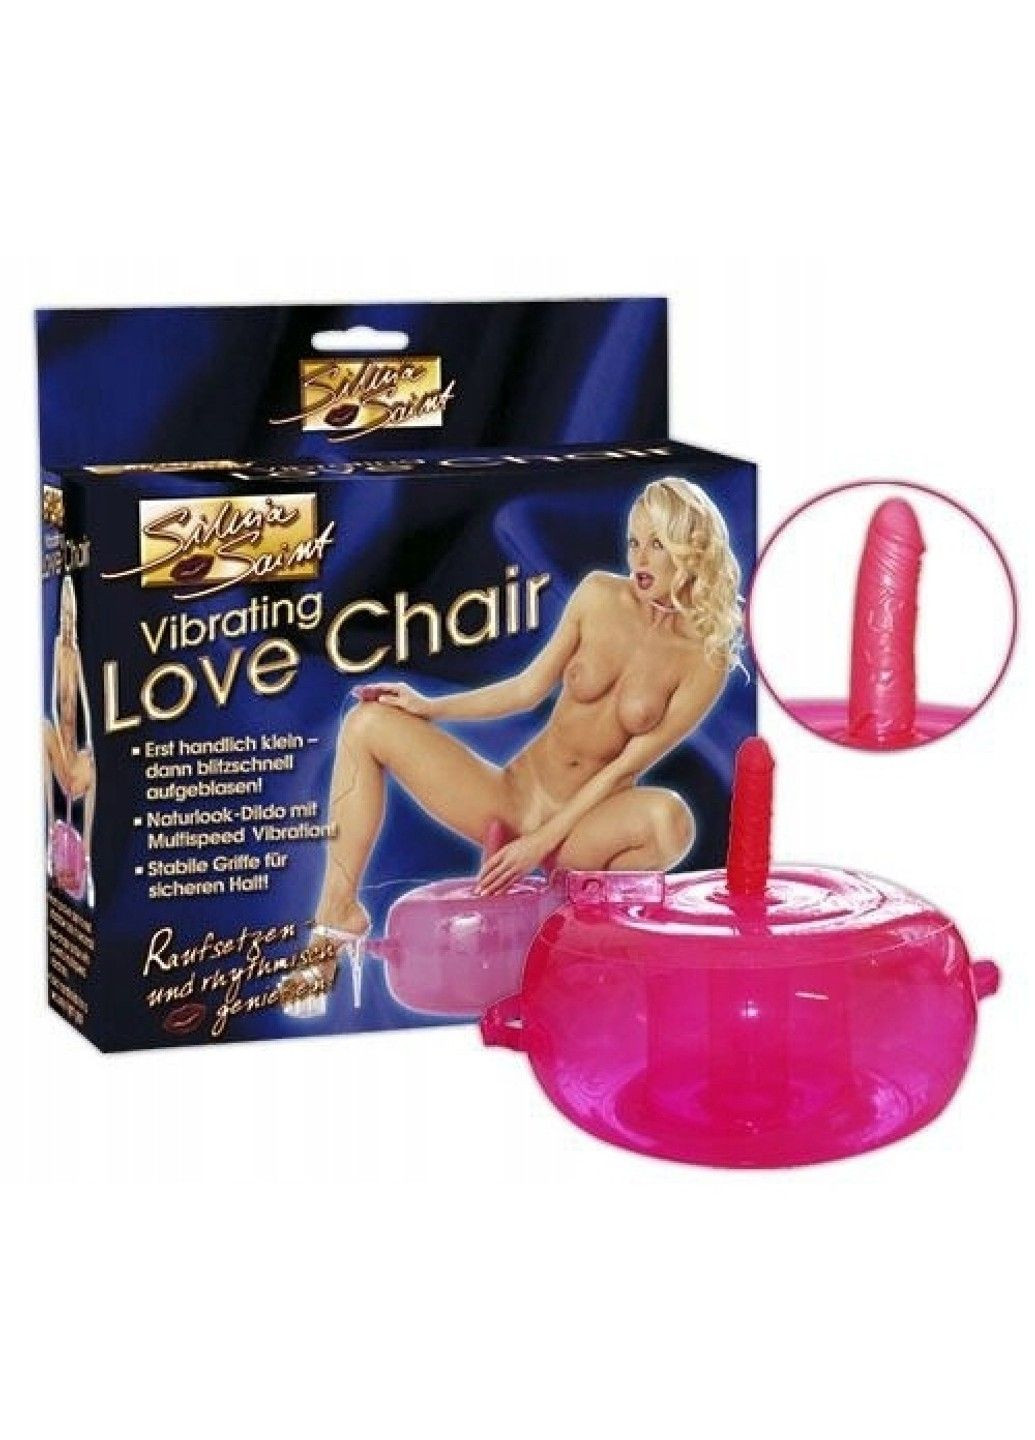 Надувная секс-подушка, со встроенным вибратором S.S.Love Chair You2Toys (289355406)